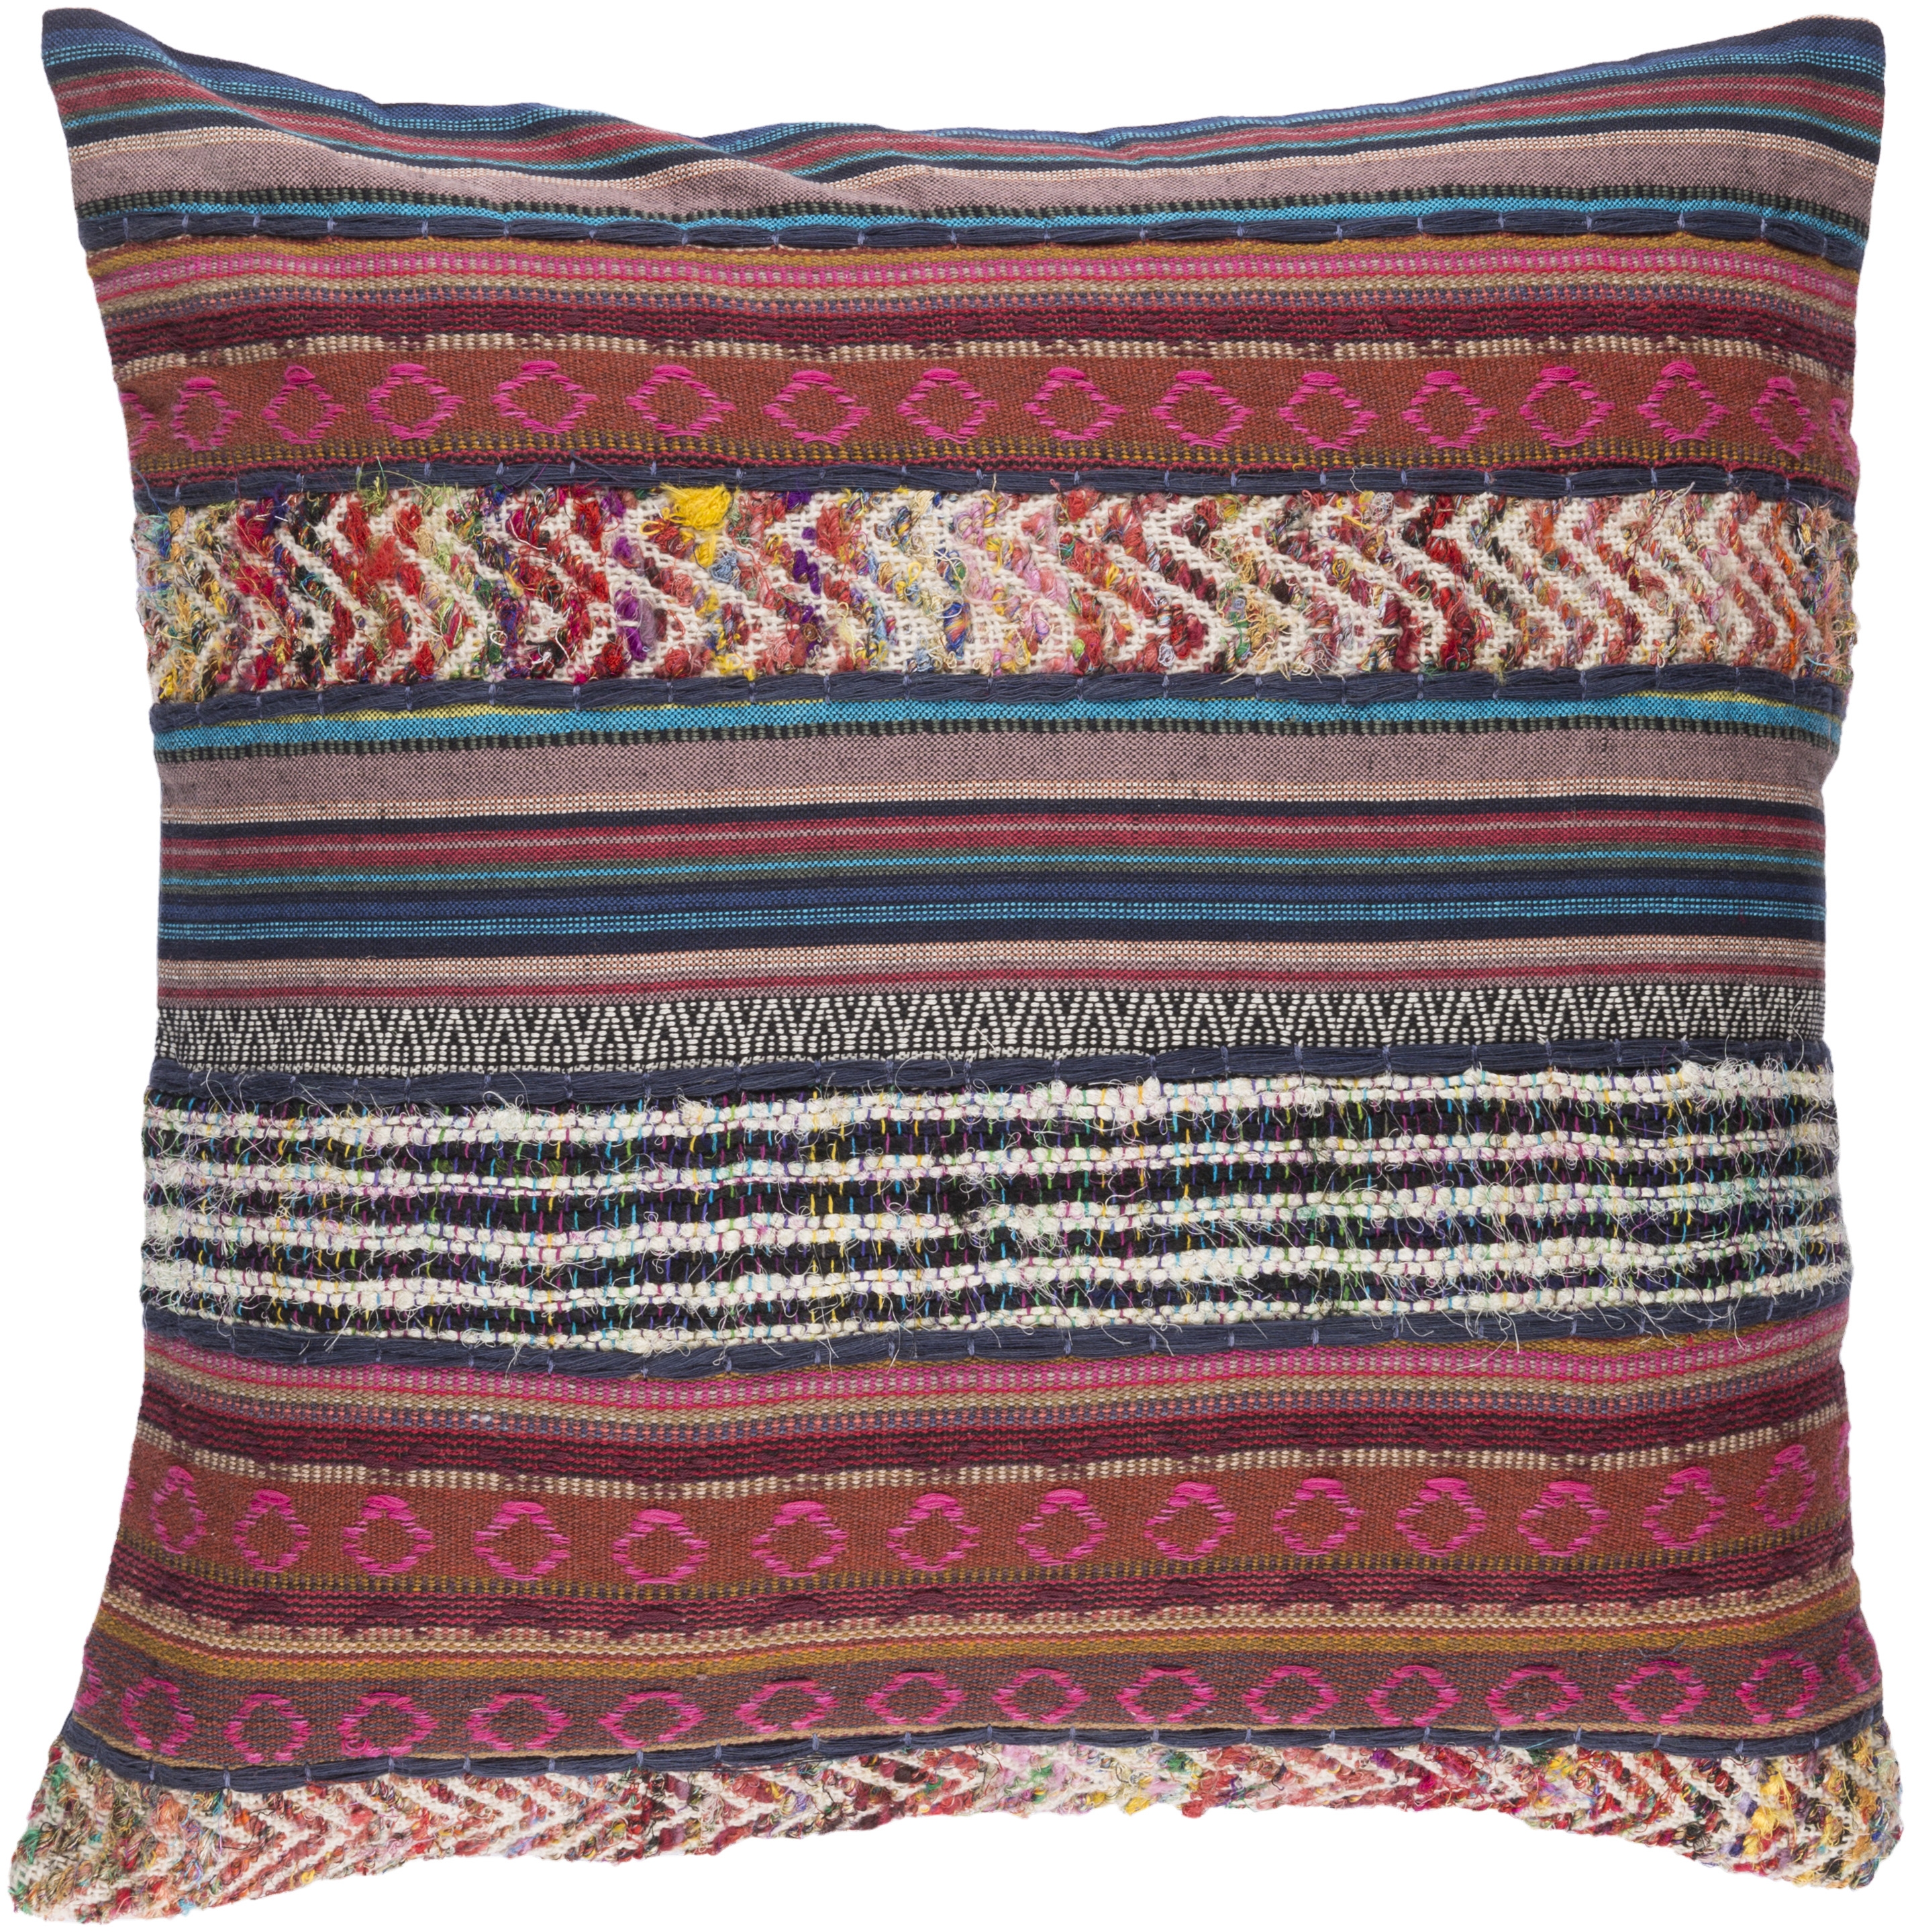 Marrakech Throw Pillow, 20" x 20", pillow cover only - Image 0